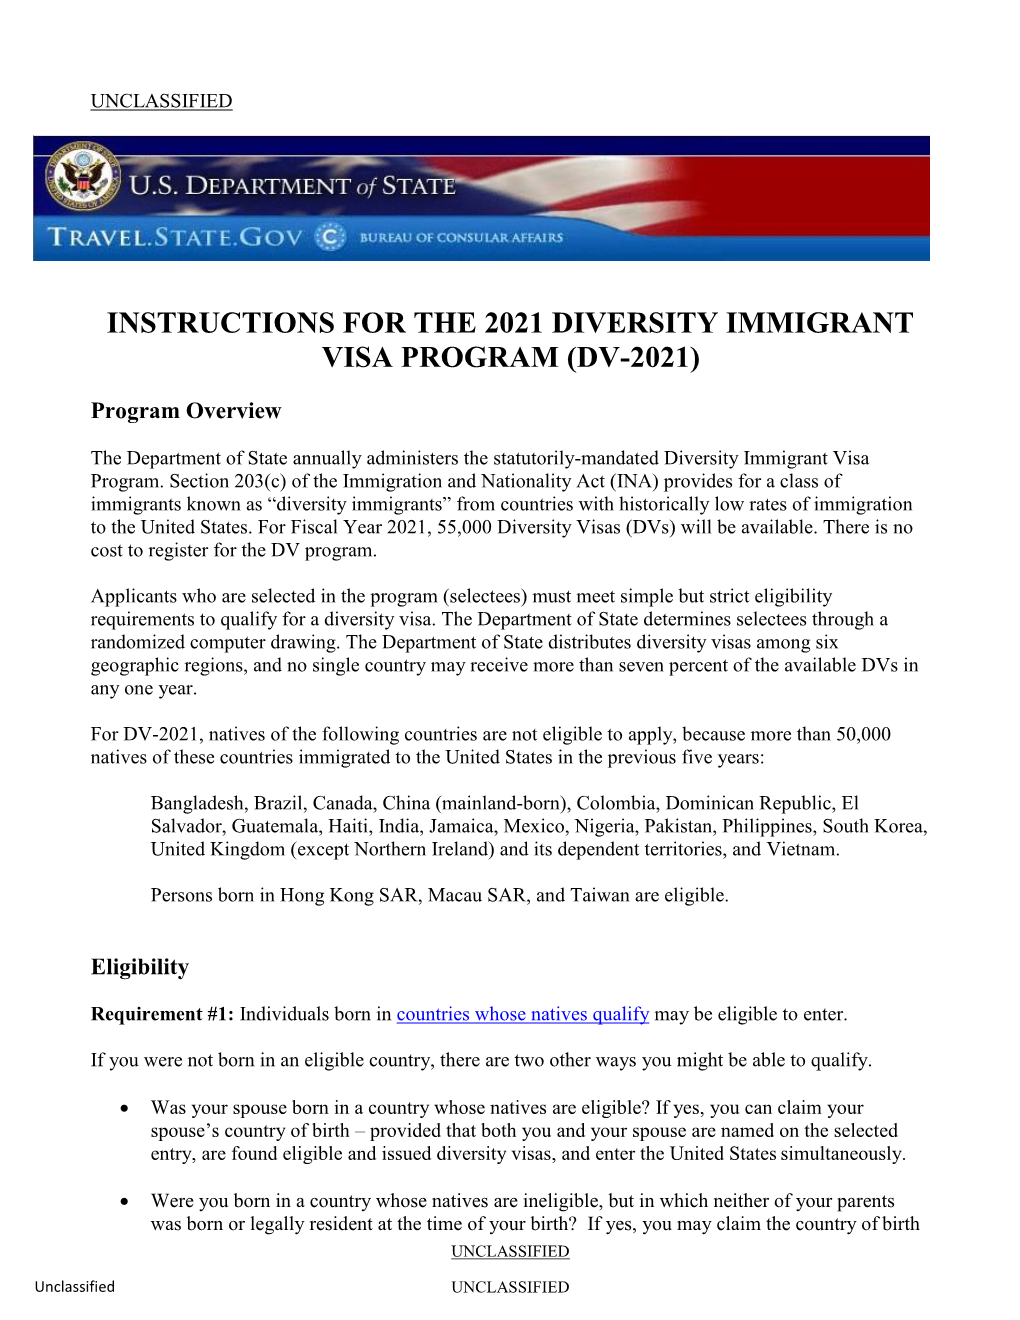 Instructions for the 2021 Diversity Immigrant Visa Program (Dv-2021)